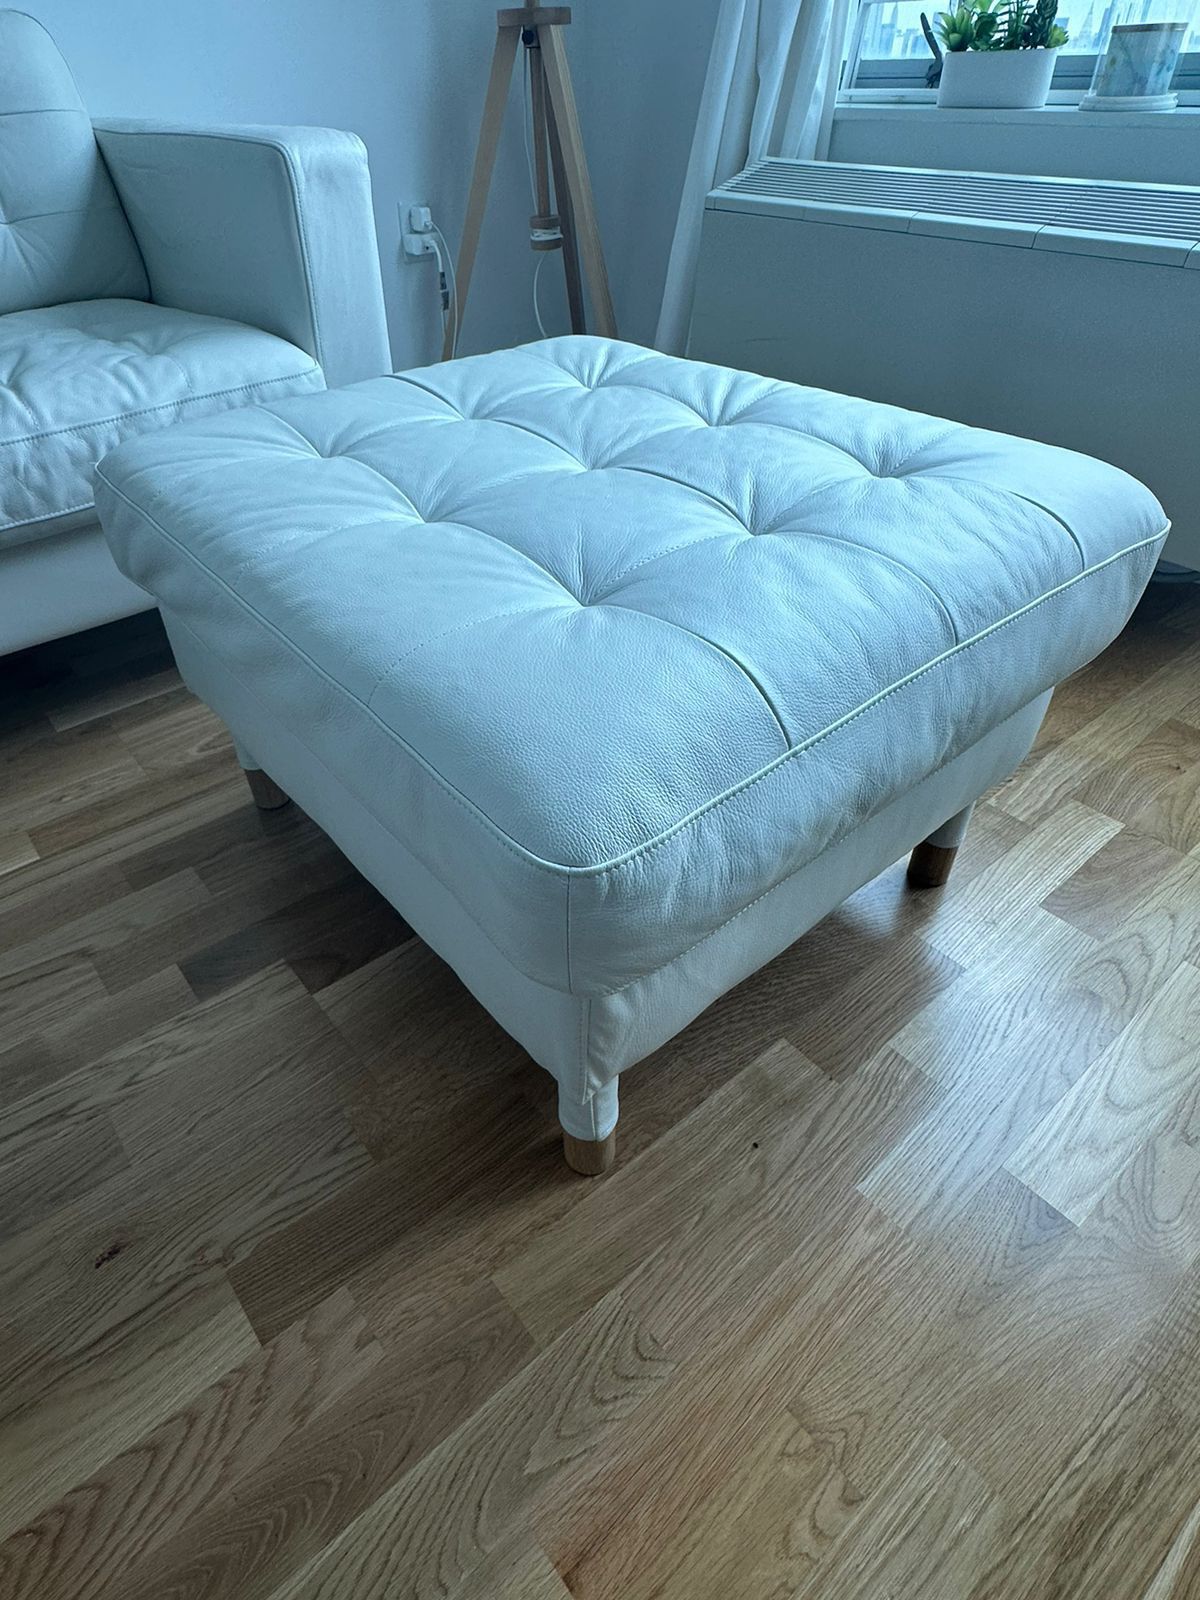 Ikea MORABO ottoman (Grann/Bomstad white/wood)